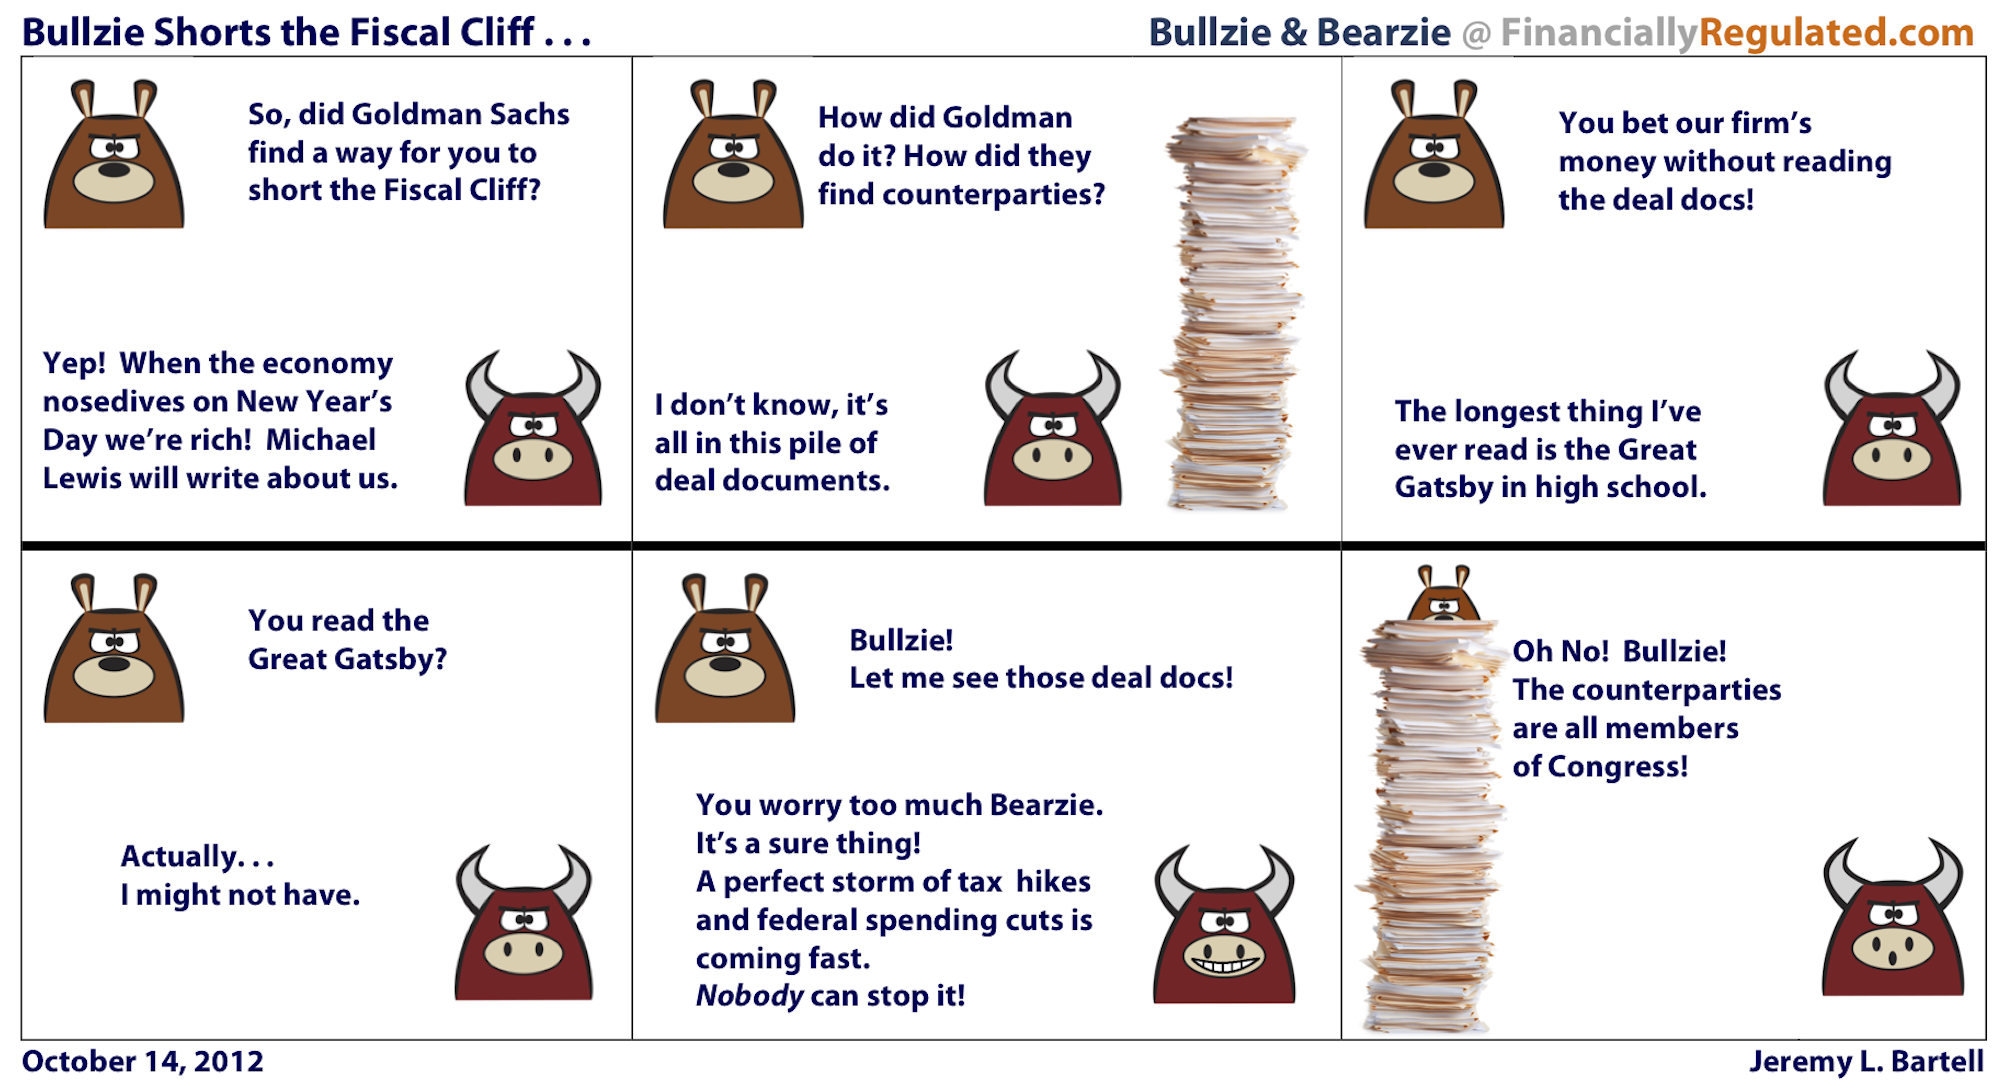 Bullzie Shorts the Fiscal Cliff